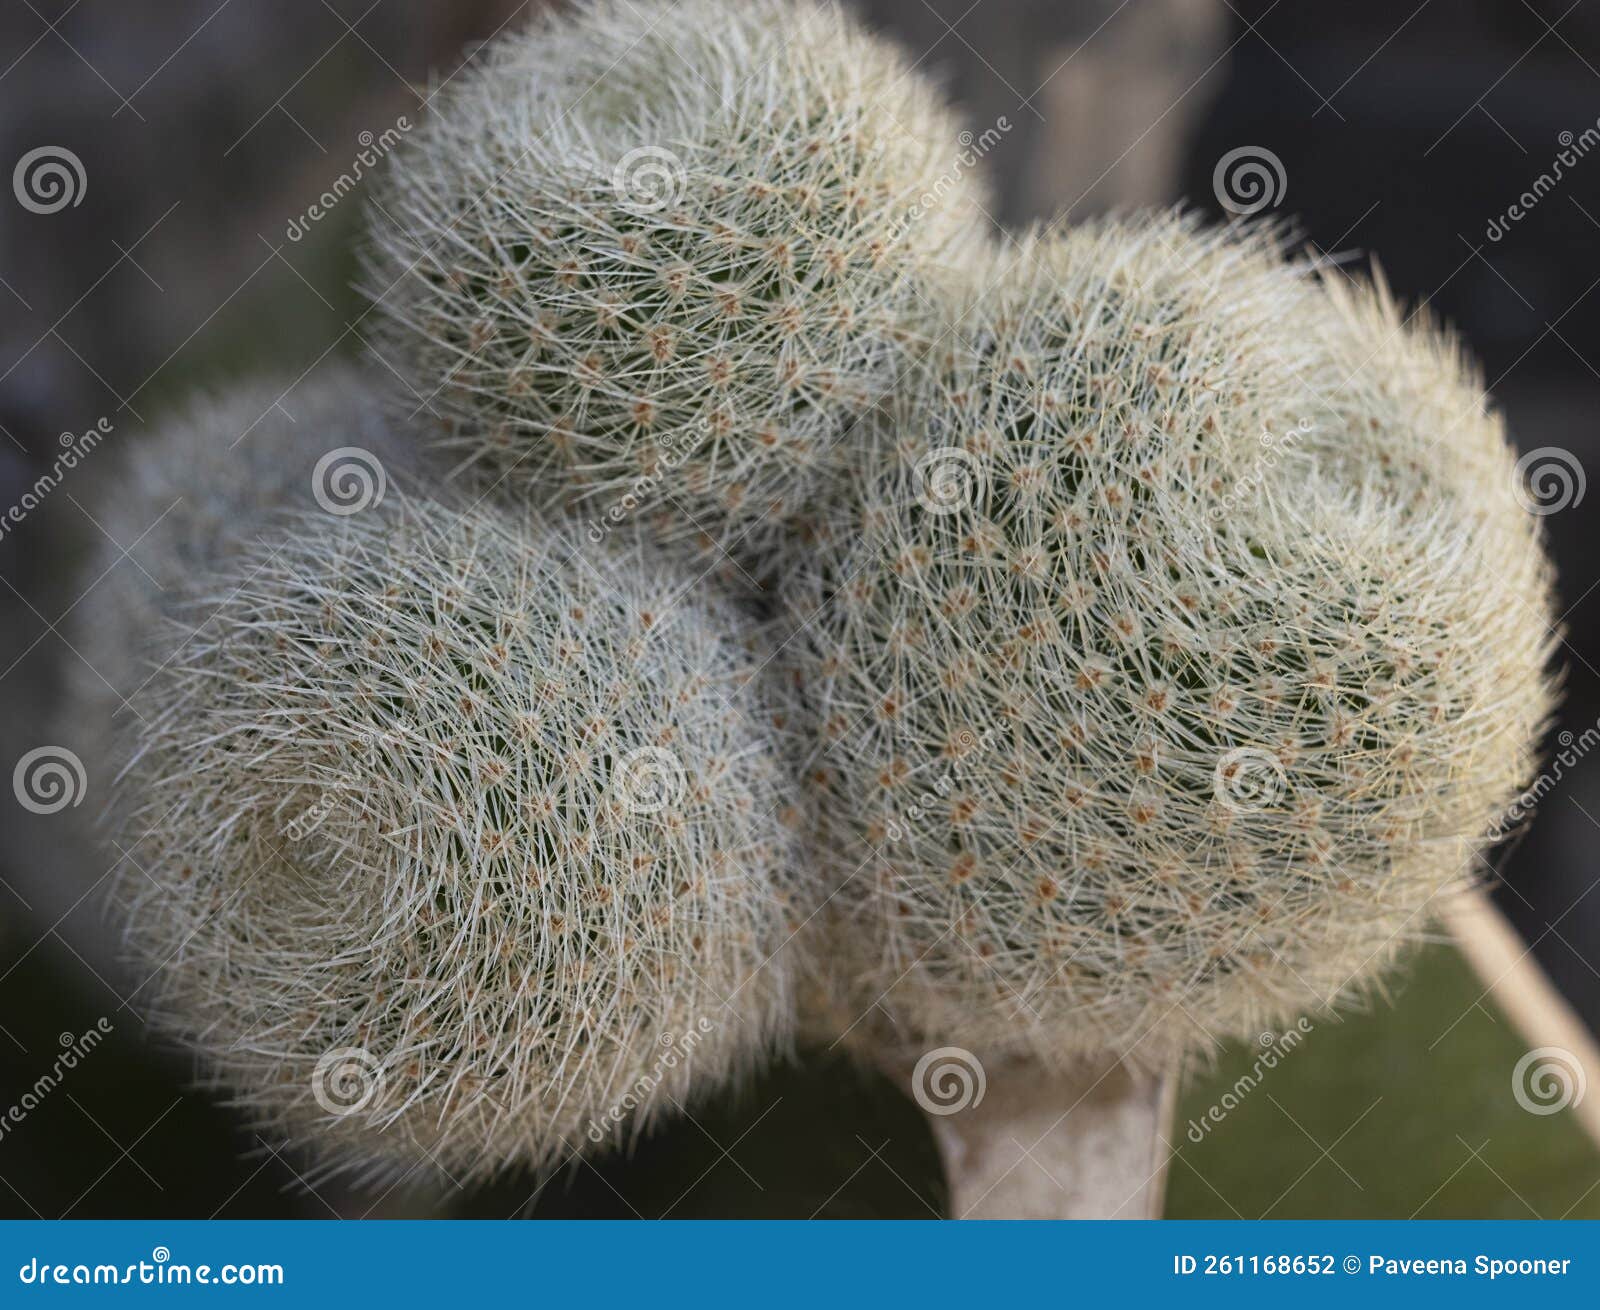 pretty thorny cactus, rebutia lima naranja